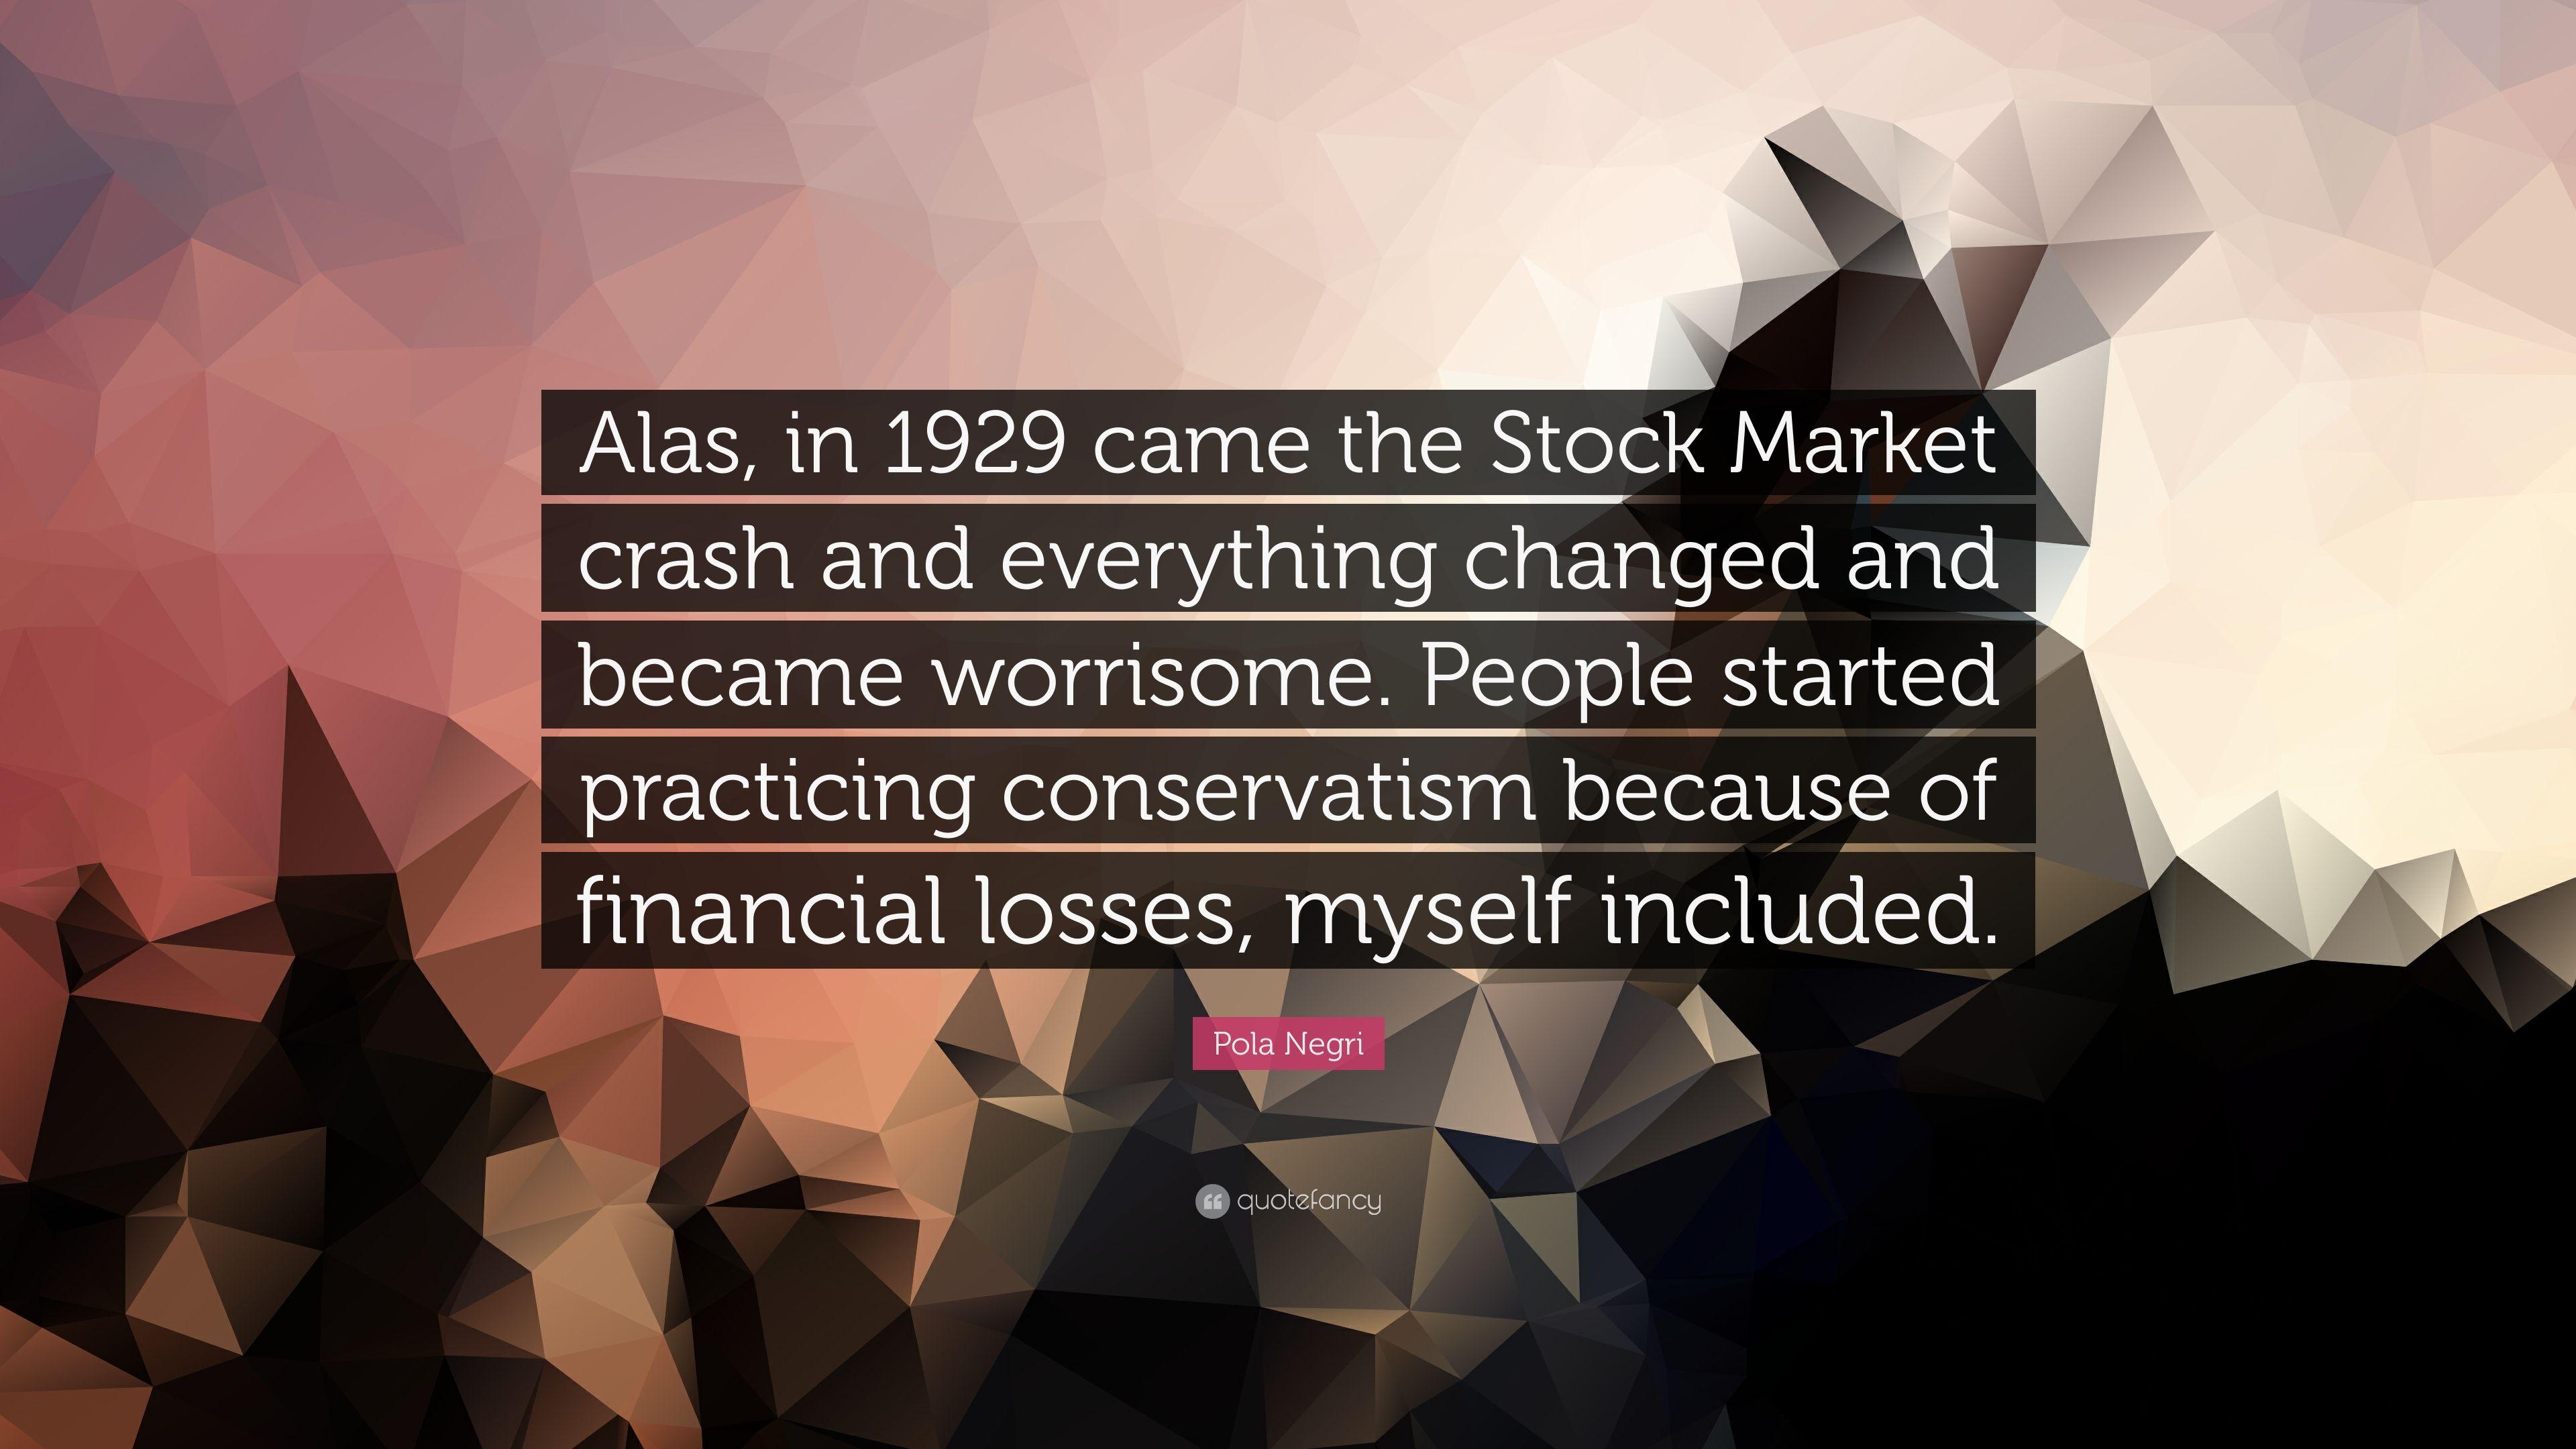 Pola Negri Quote: “Alas, in 1929 came the Stock Market crash